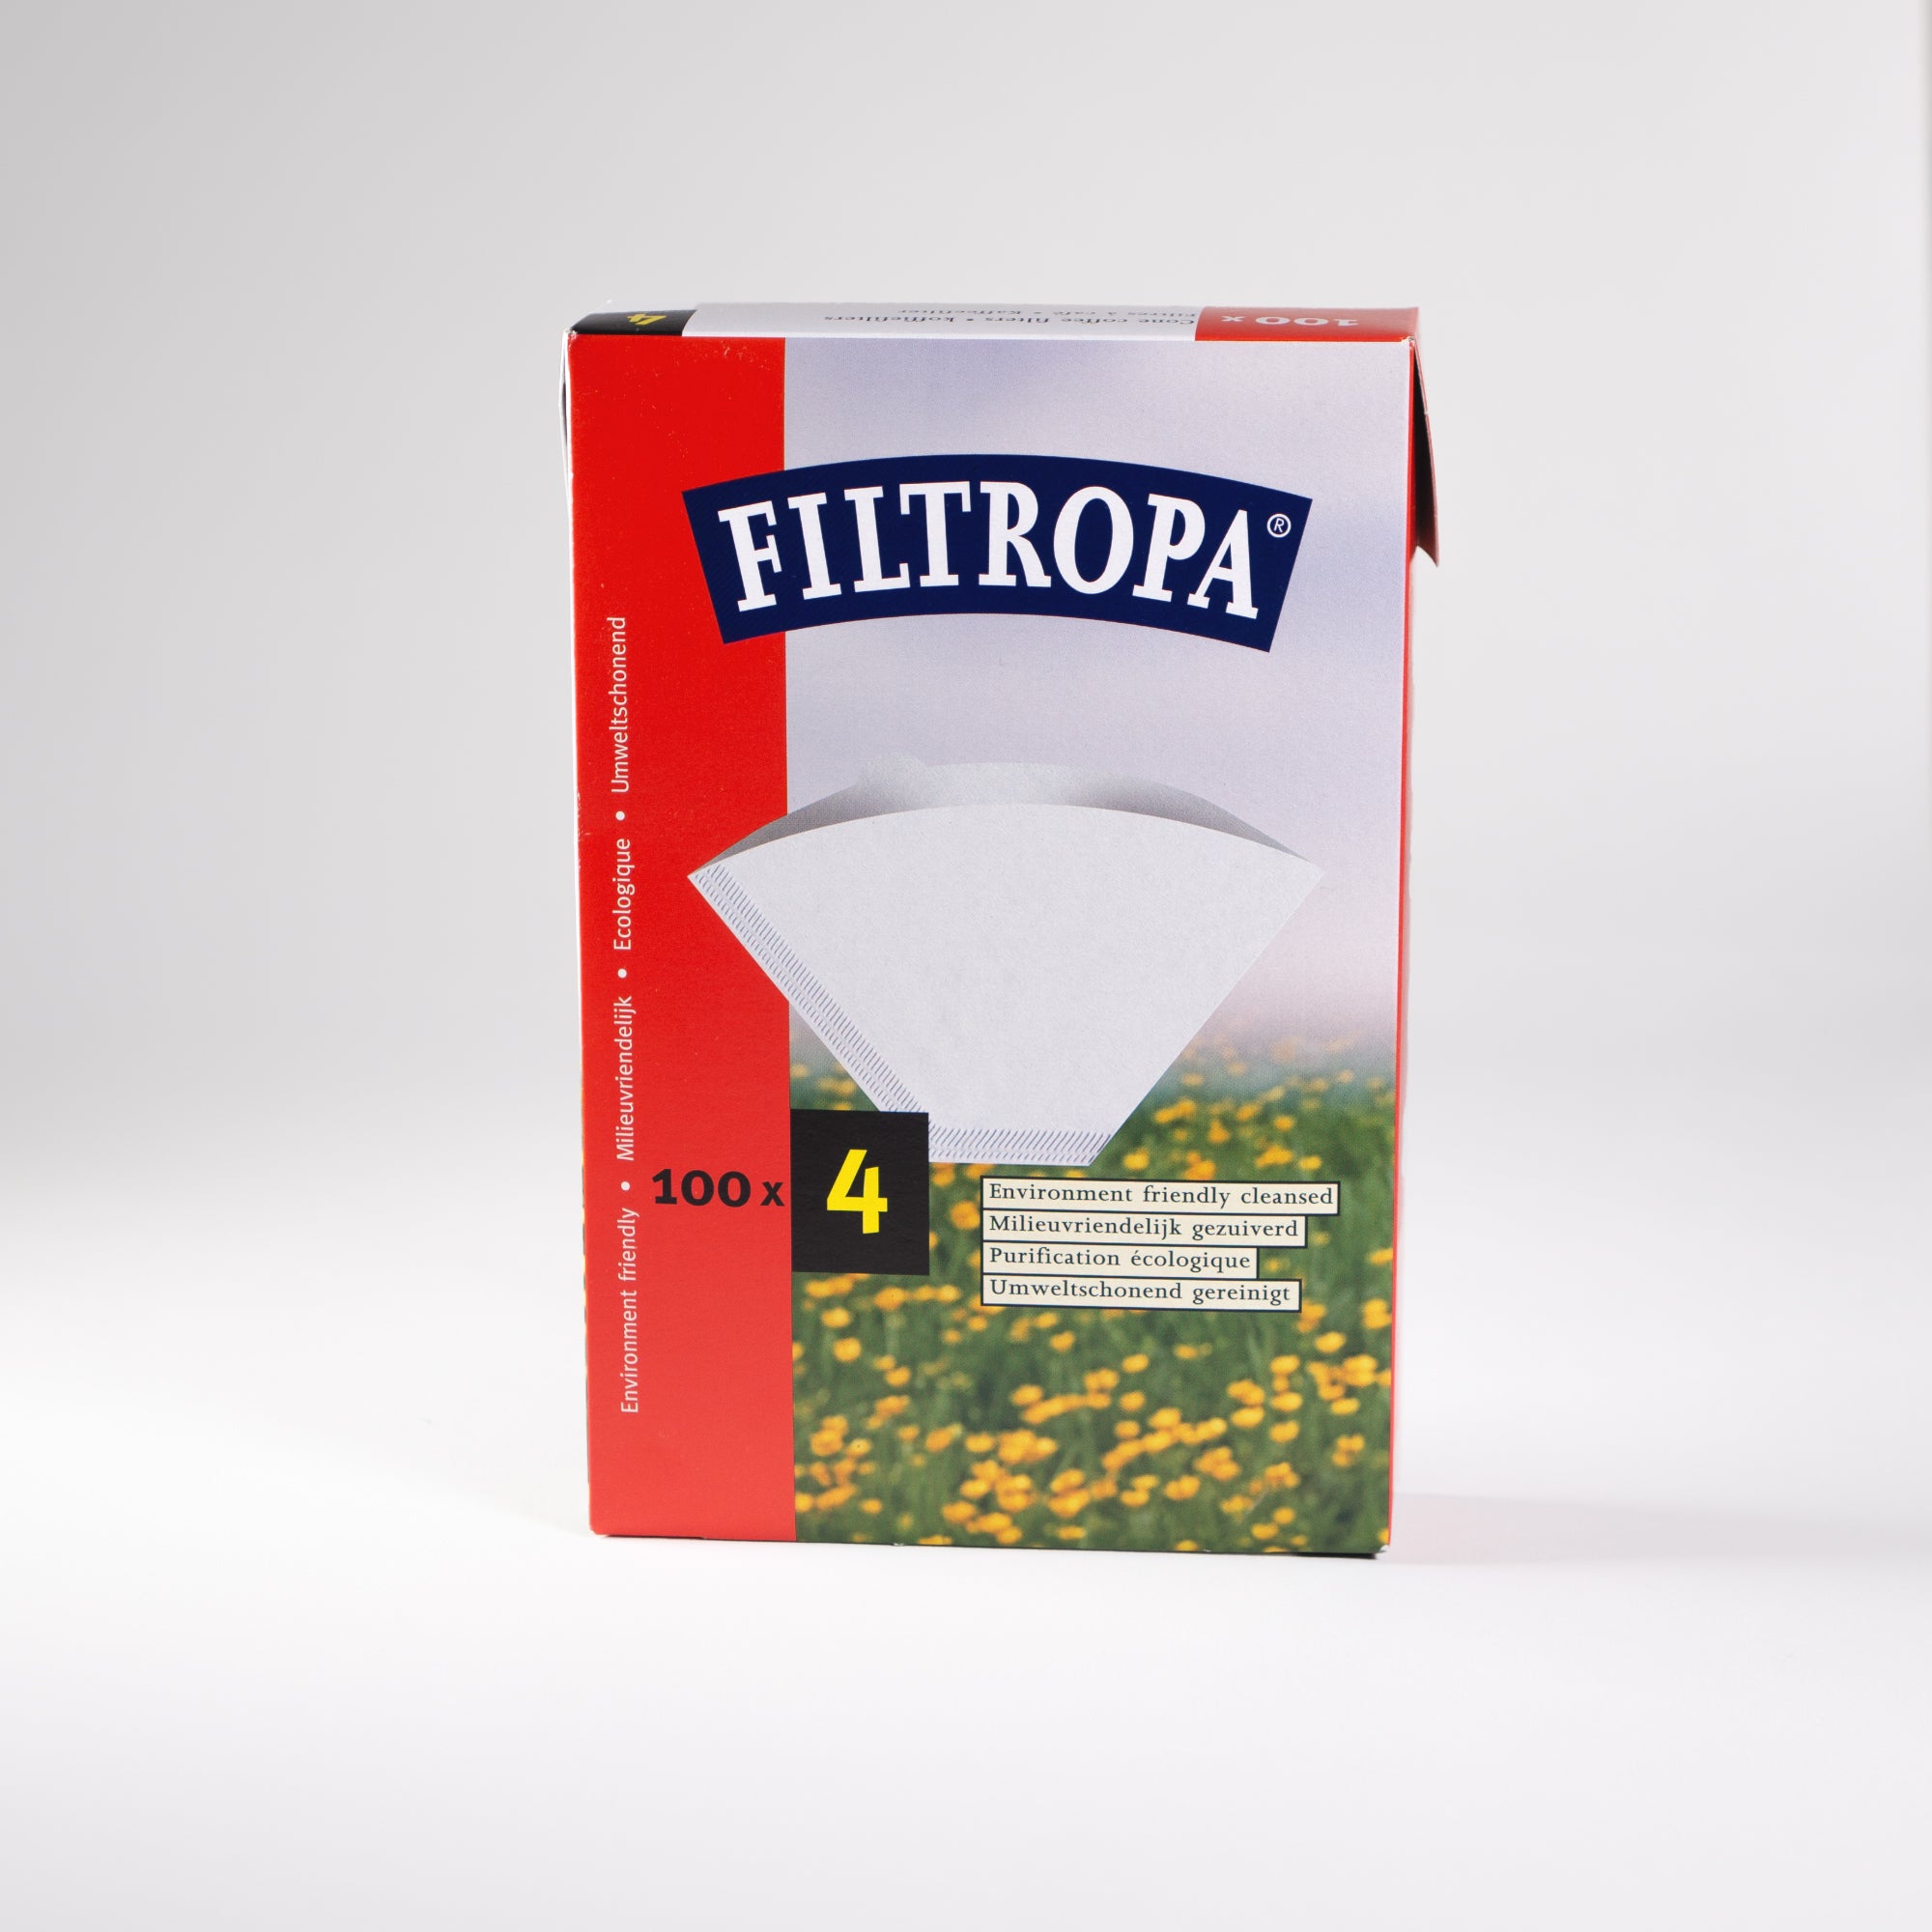 Filtropa "Melitta style" filters